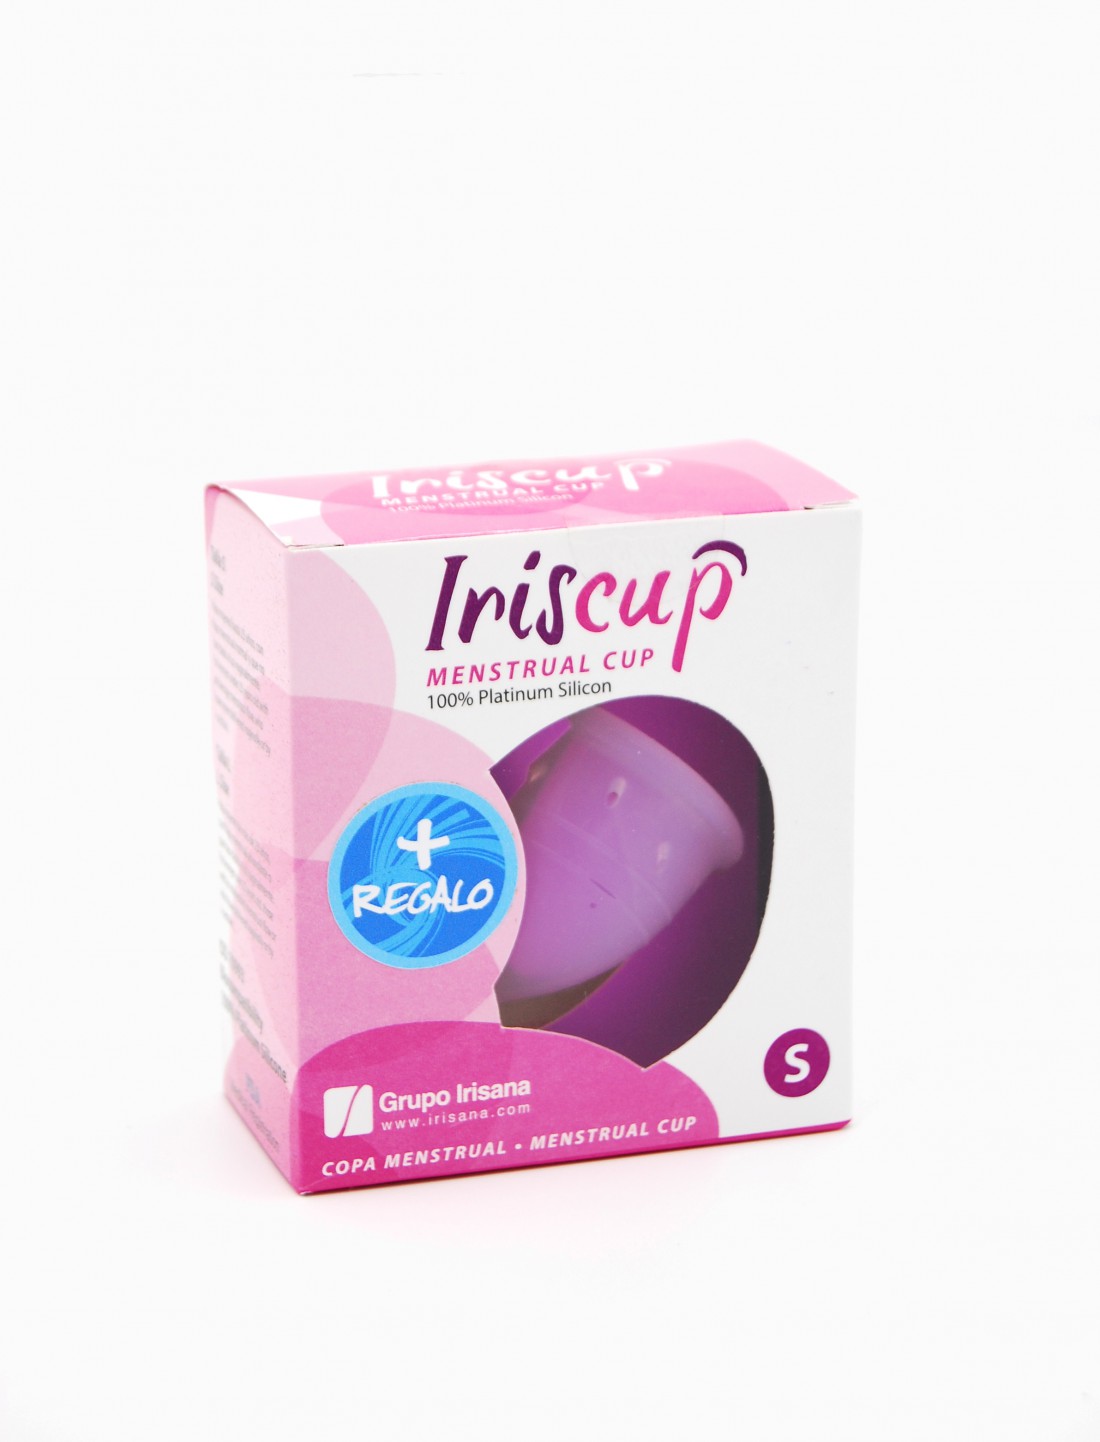 Copa menstrual Iriscup